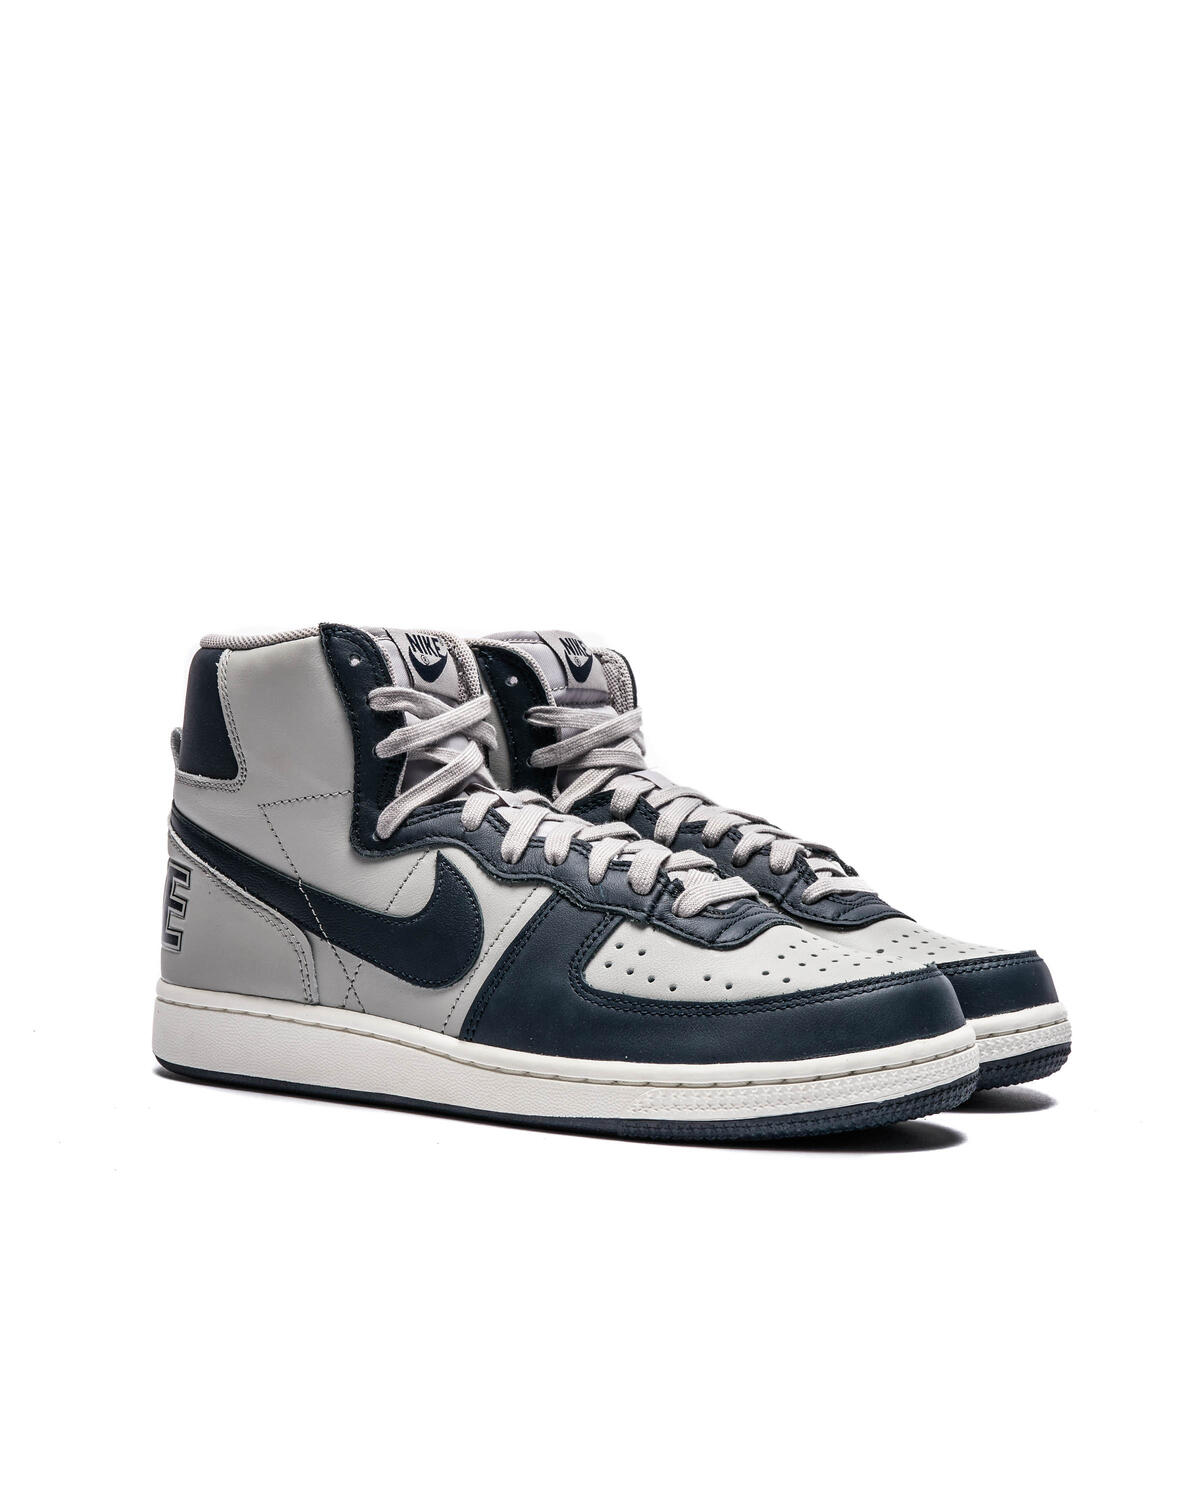 Nike Terminator High Georgetown FB1832-001 Release Date